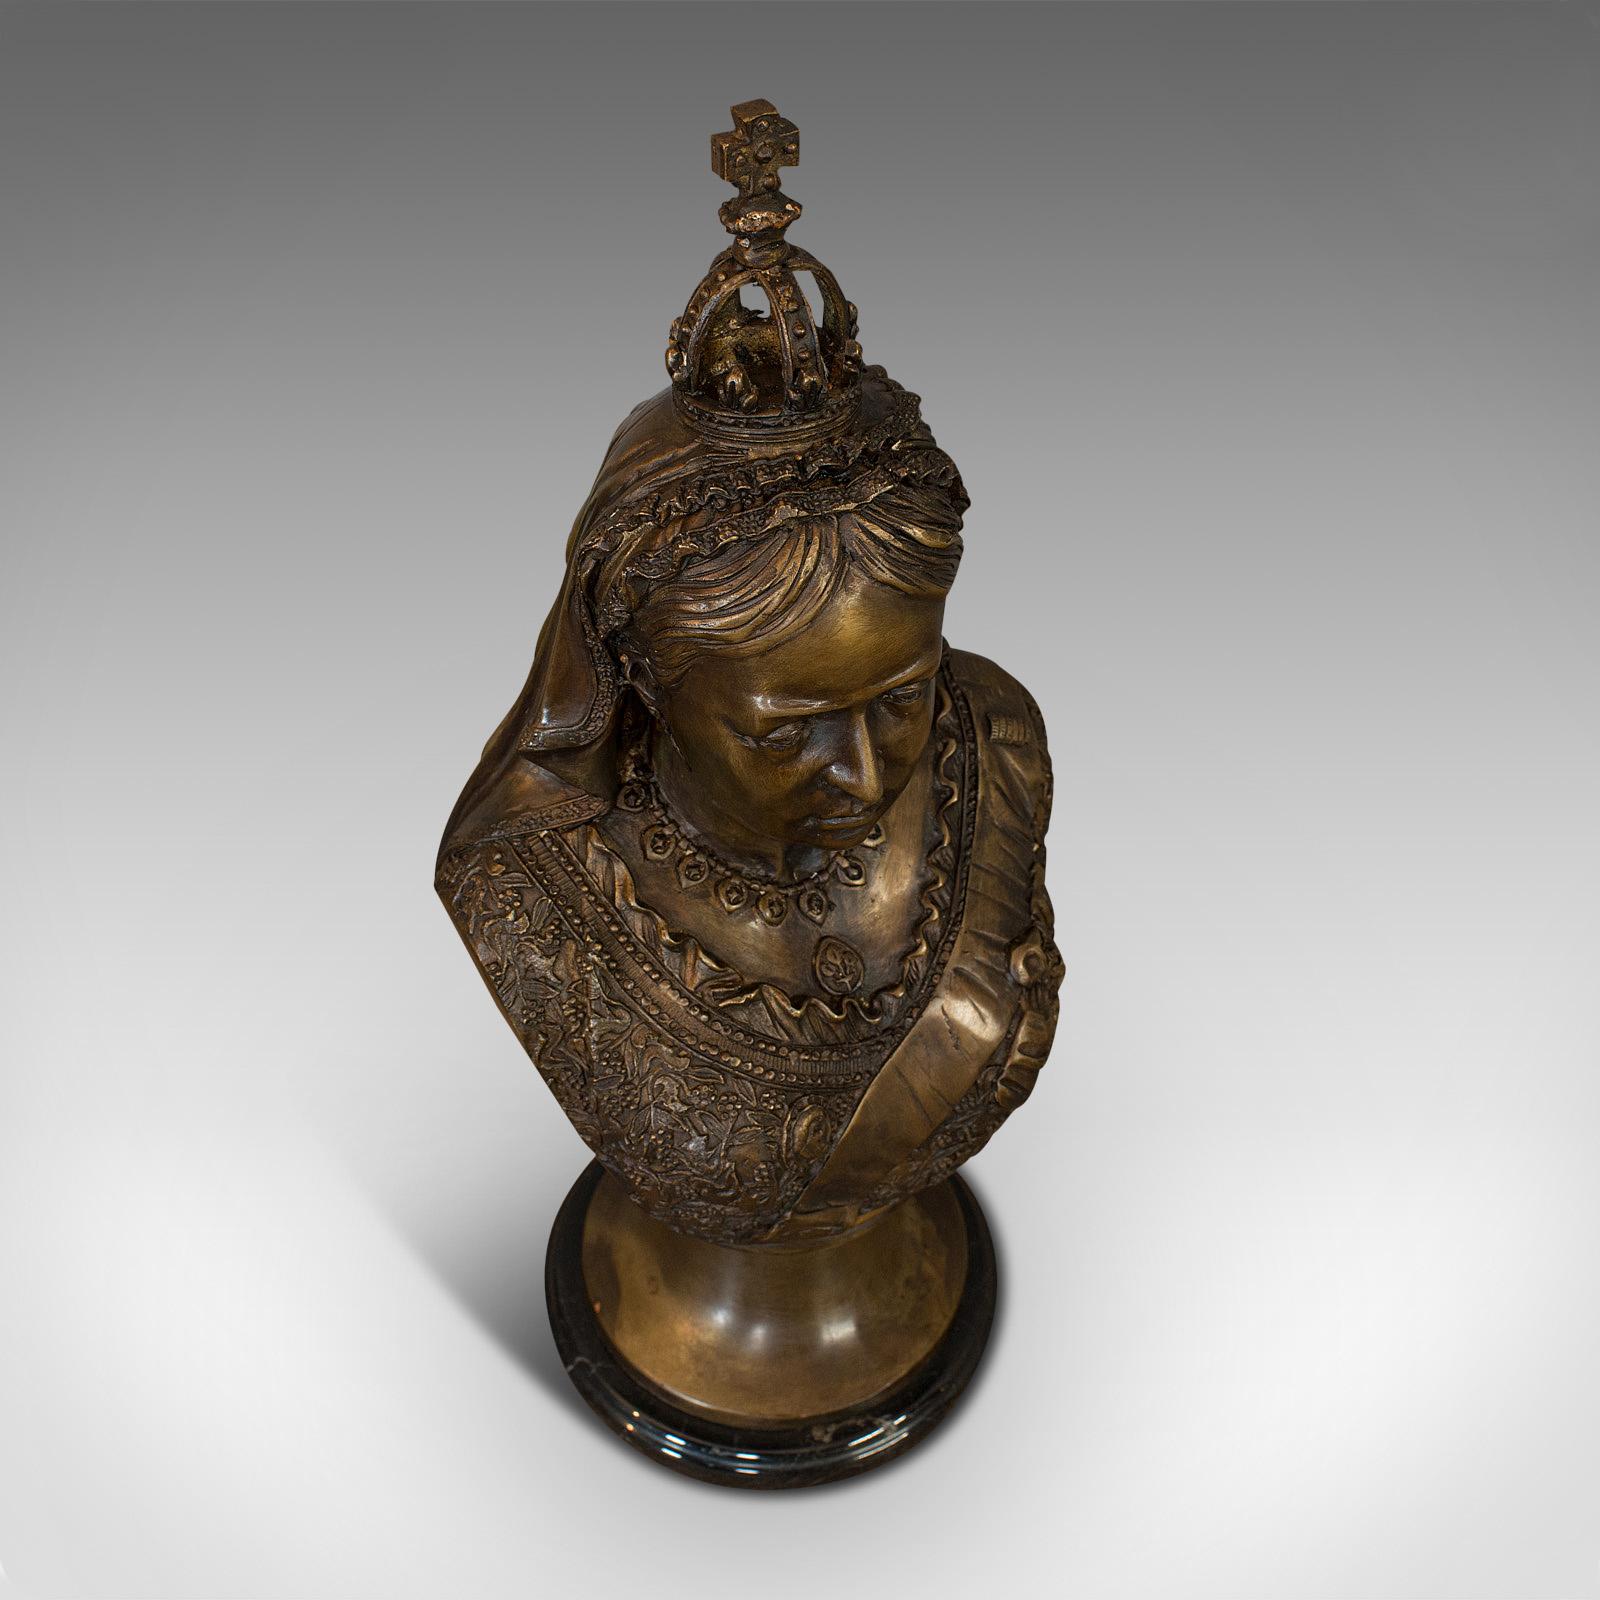 20th Century Vintage Bust, Queen Victoria, English, Bronze, Royal Portrait, Monarch, Empress